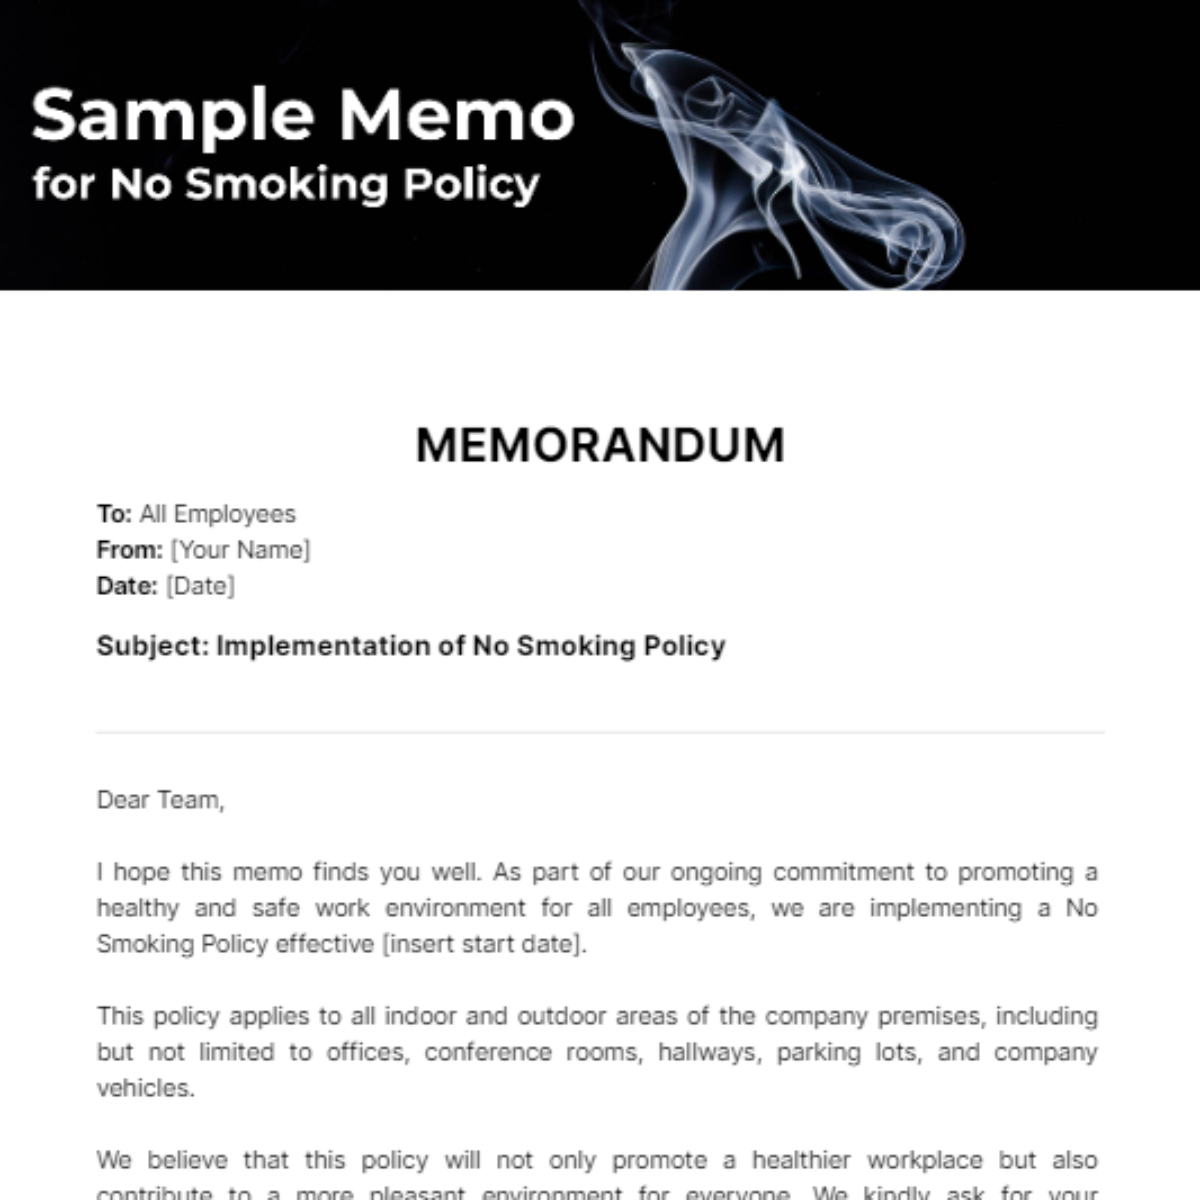 Sample Memo for No Smoking Policy